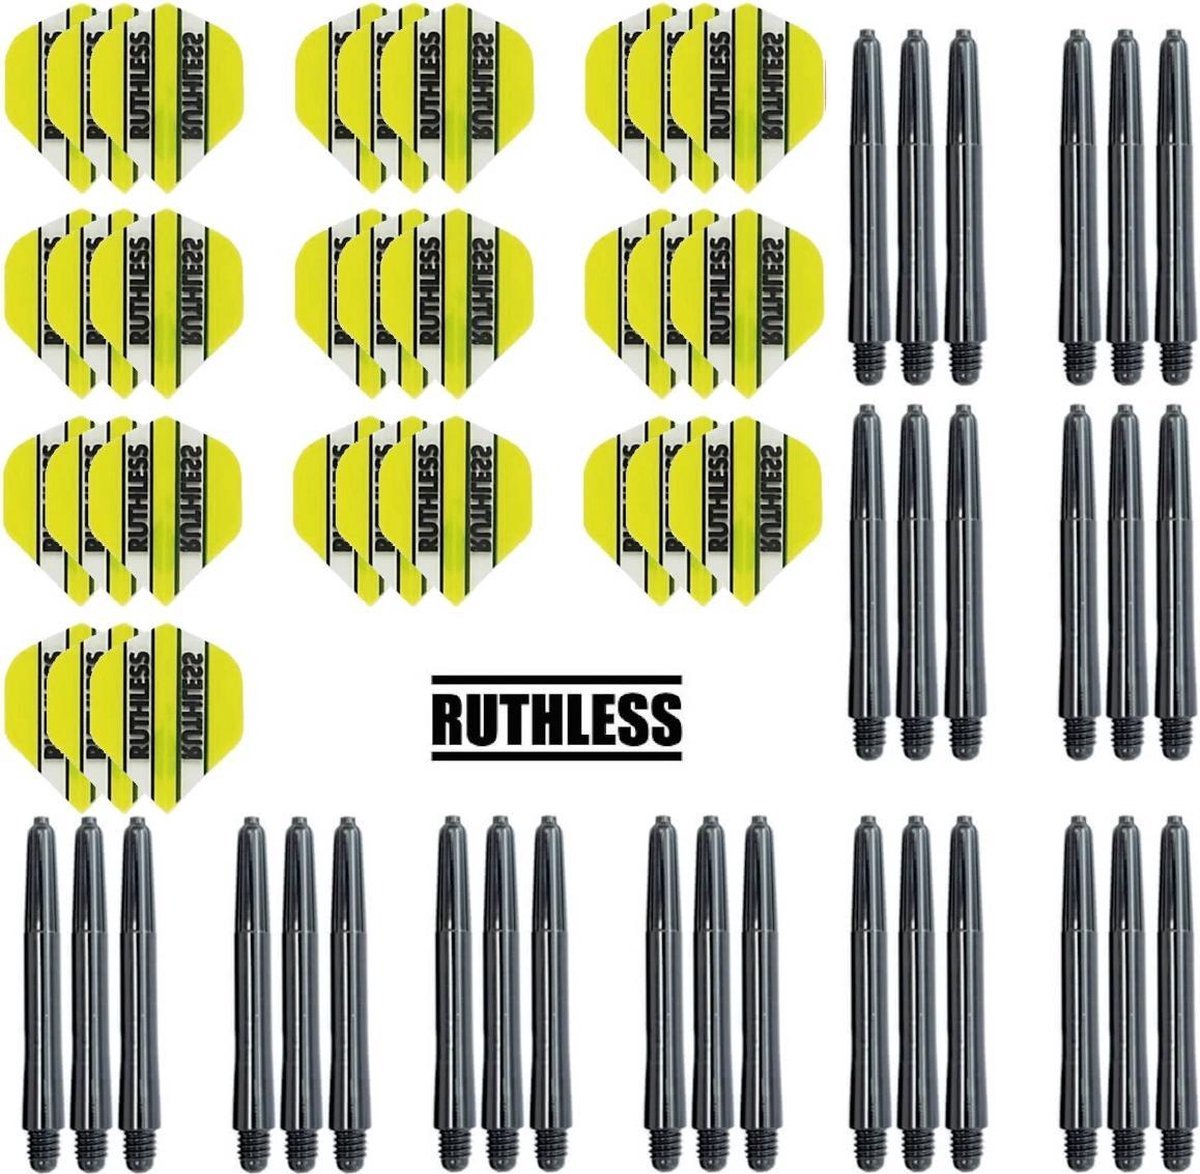 10 Sets Ruthless Flights Geel – plus 10 sets dart shafts – extra short